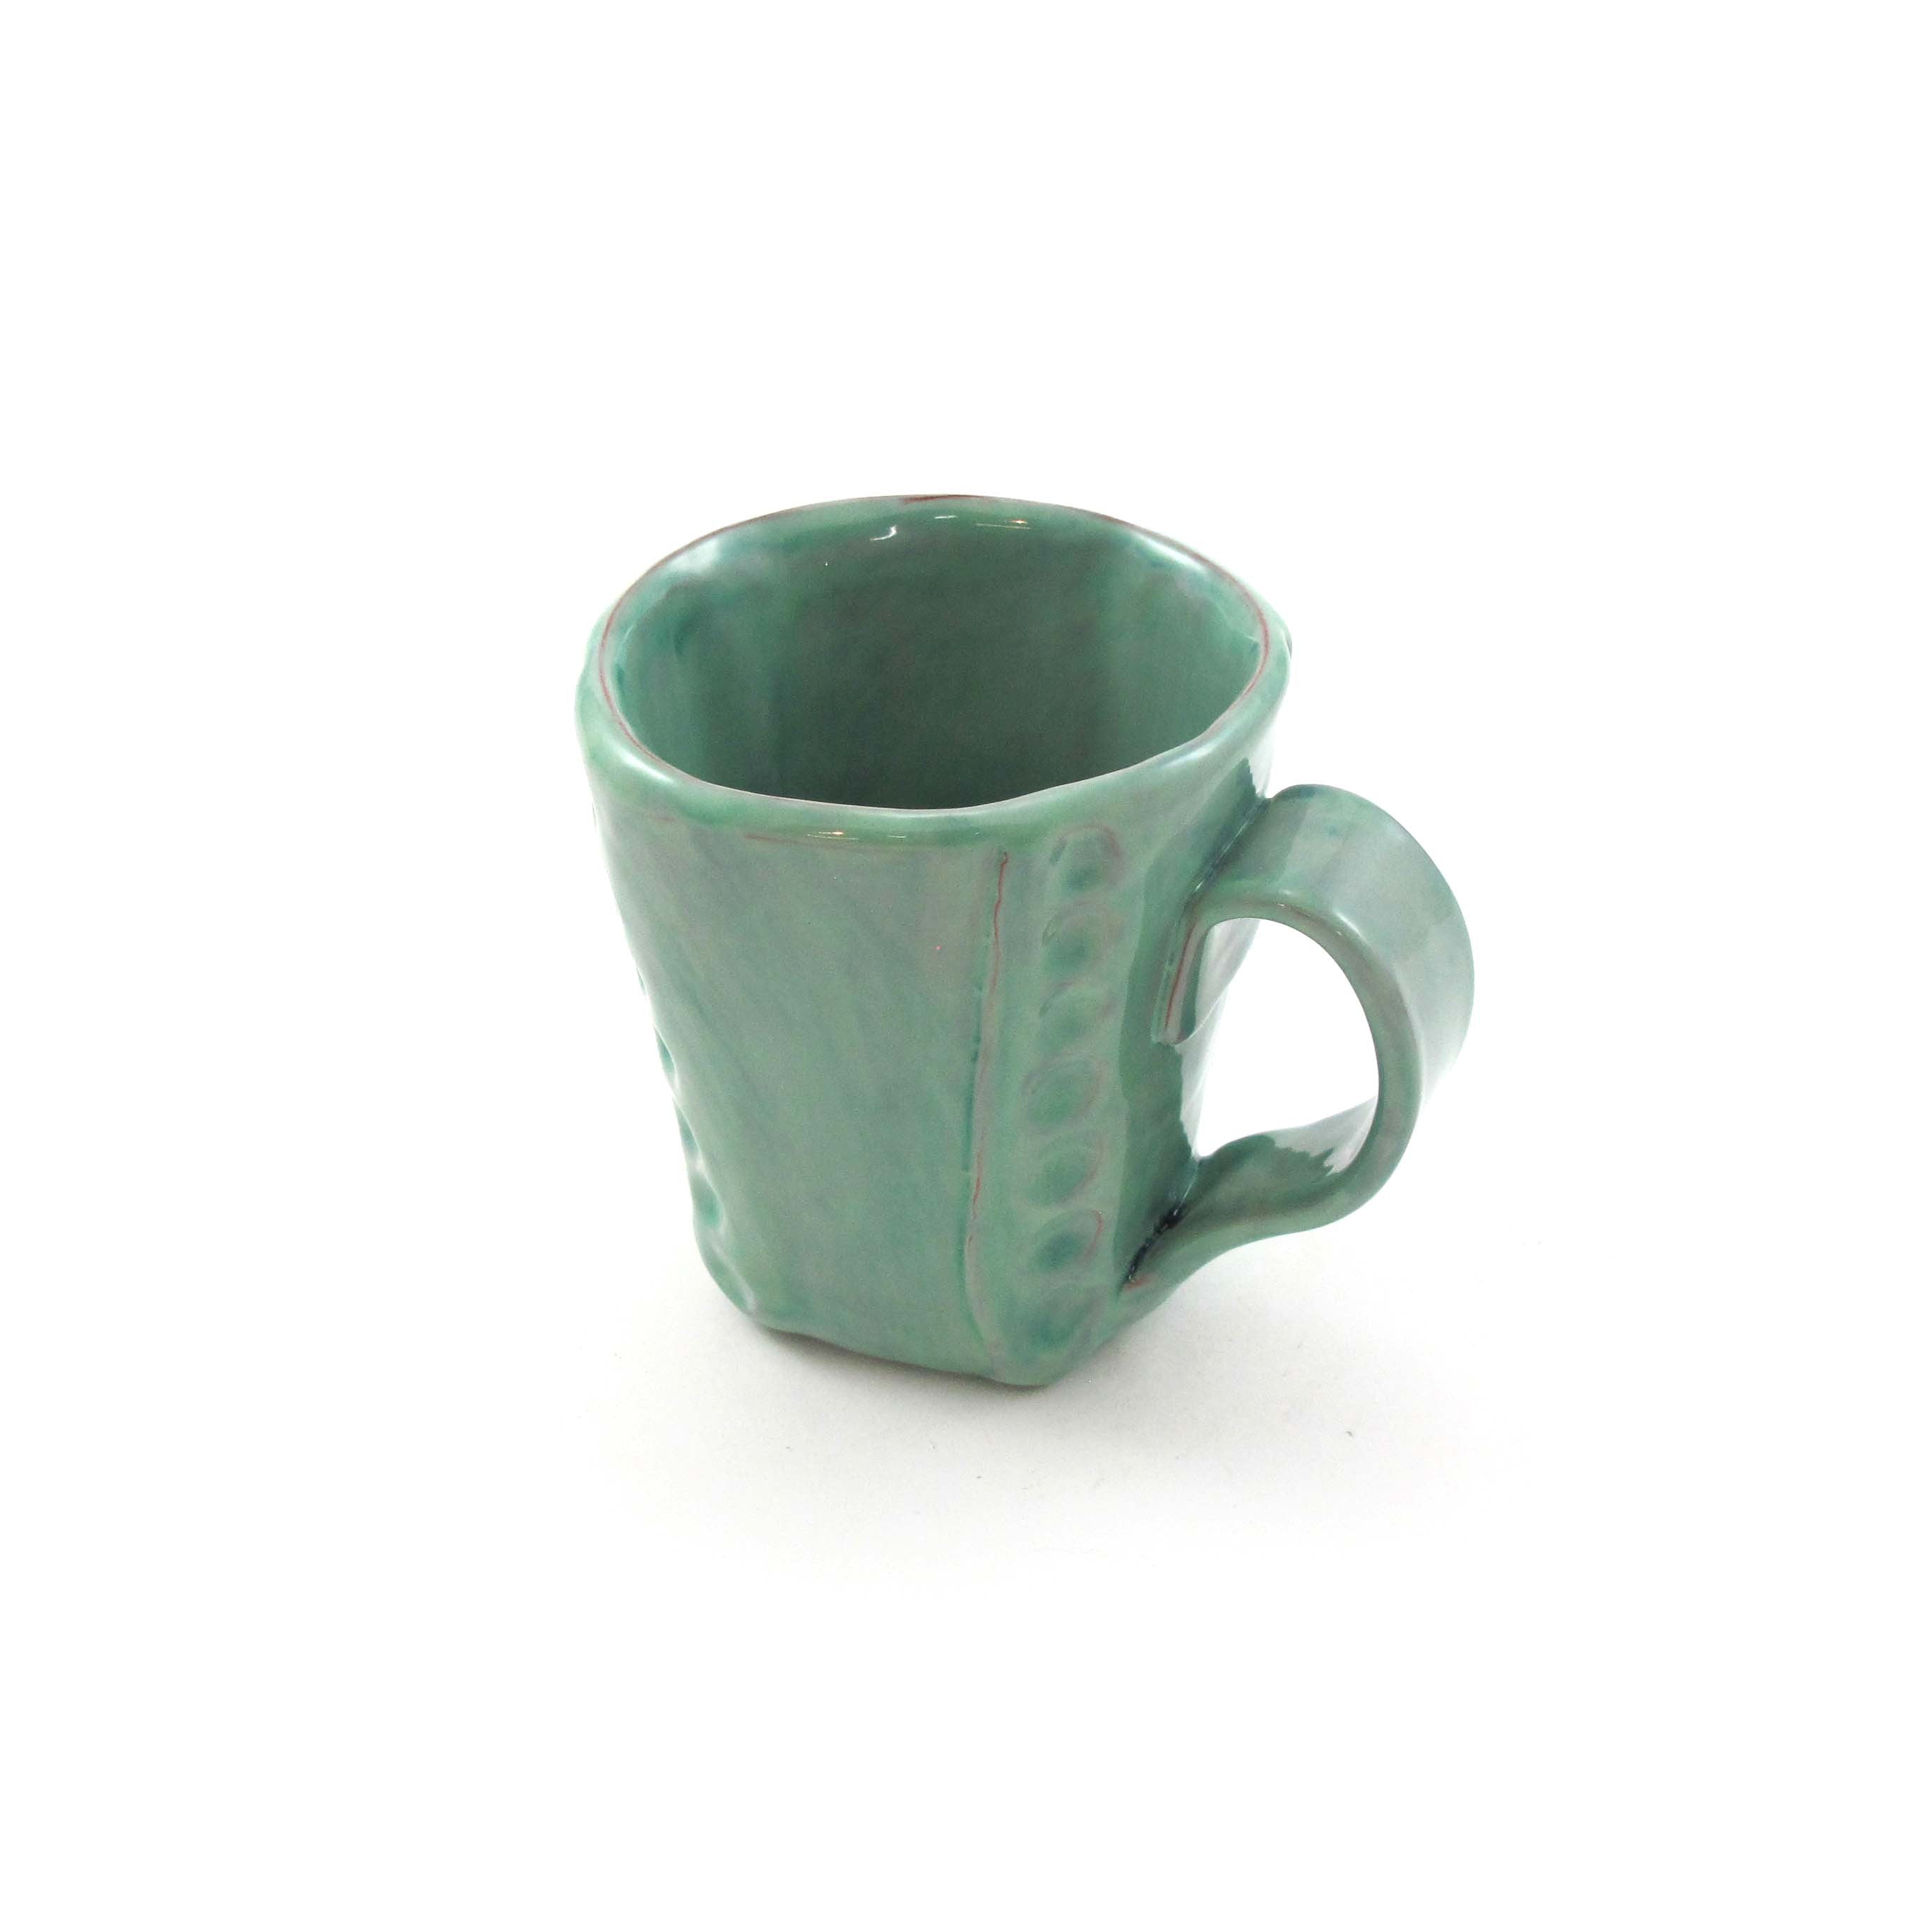 Architect Definition Tall Coffee or Tea Mug, Latte Size